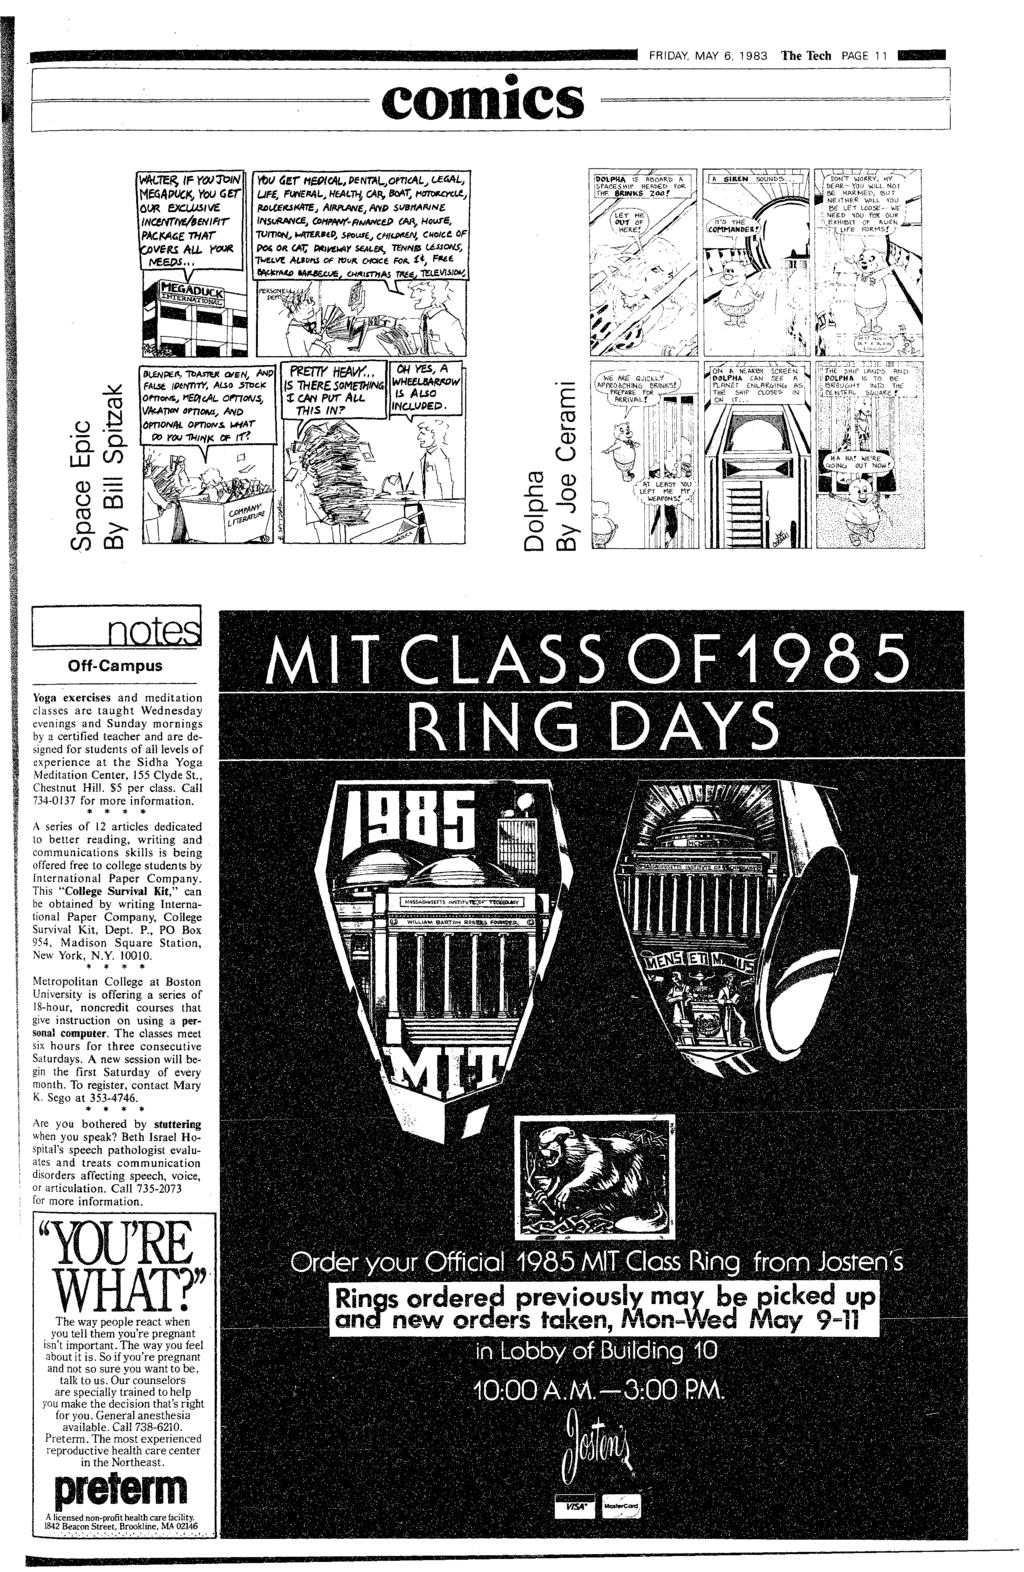 Bls FRDAY, MAY 6. 1983 The Tech PAGE 11 - e 1 eomcs-- ----- ~~~~~~~~~~~~~~~~~~~~ ma Uer 1191CAL, PENTAL,,oPcAL, art4, lfe, F W AL, HeC-Ao, capn RoAT, mocdue.